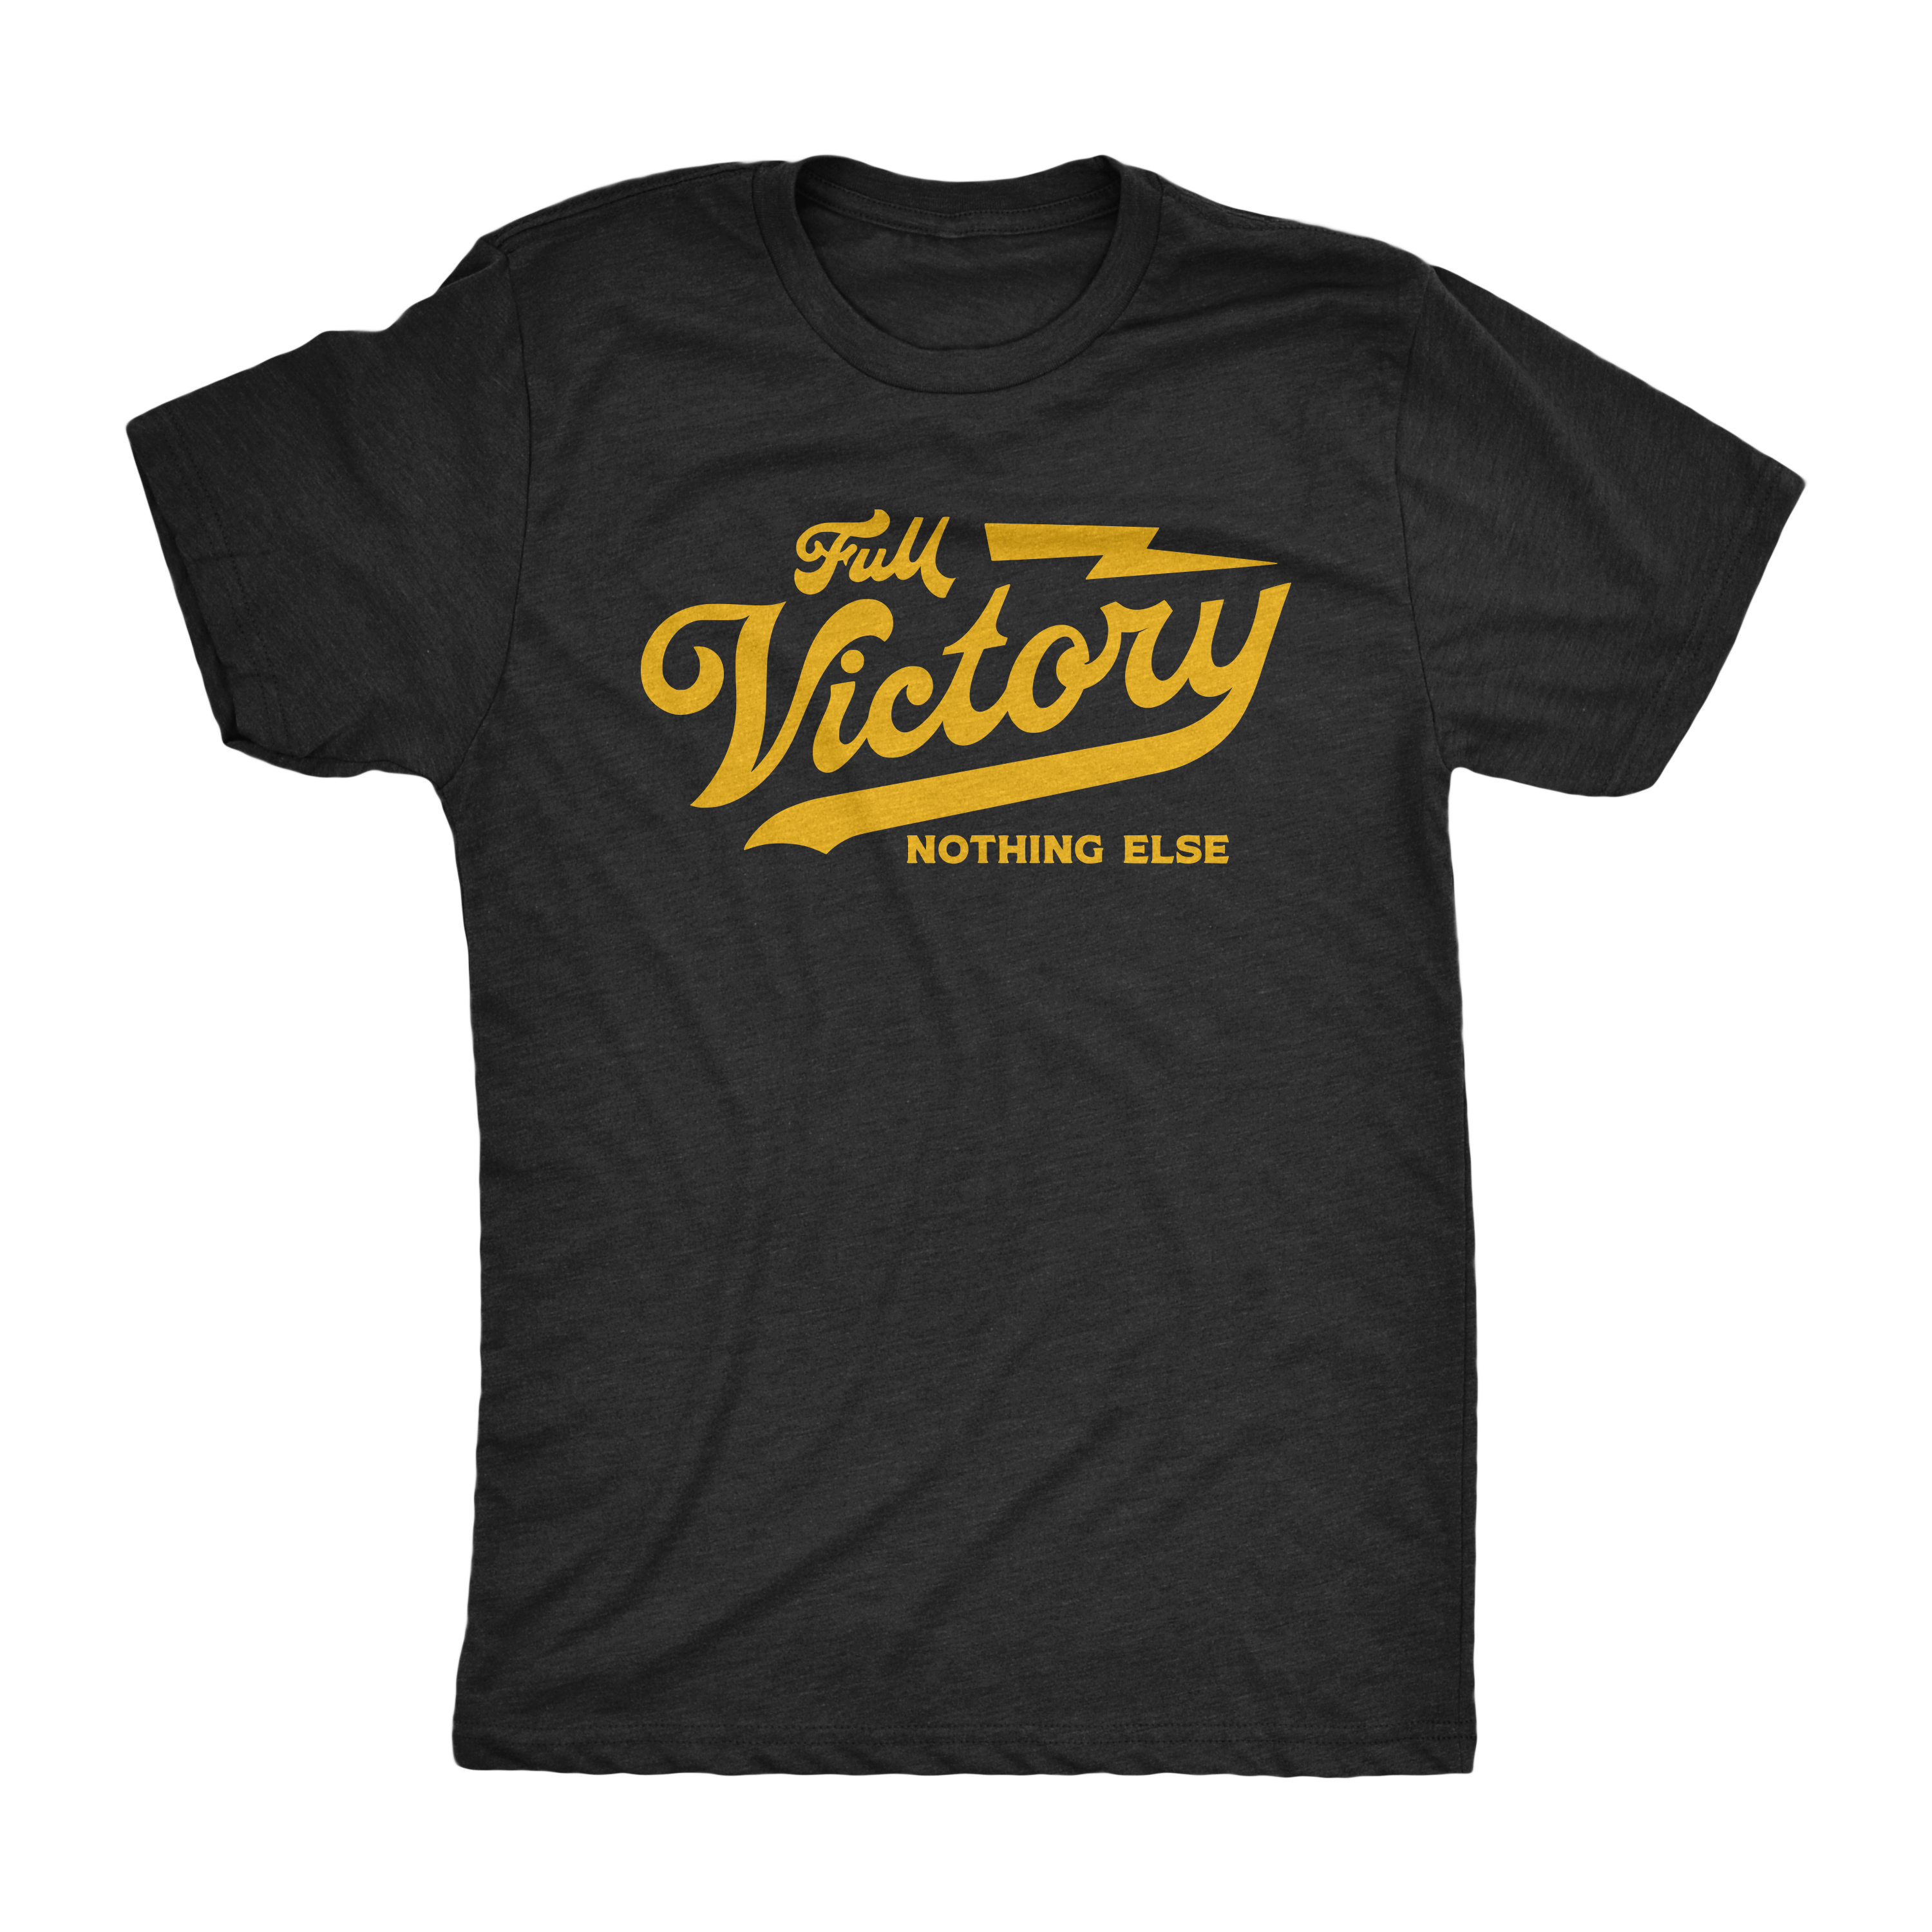 Full Victory Mantra Shirt